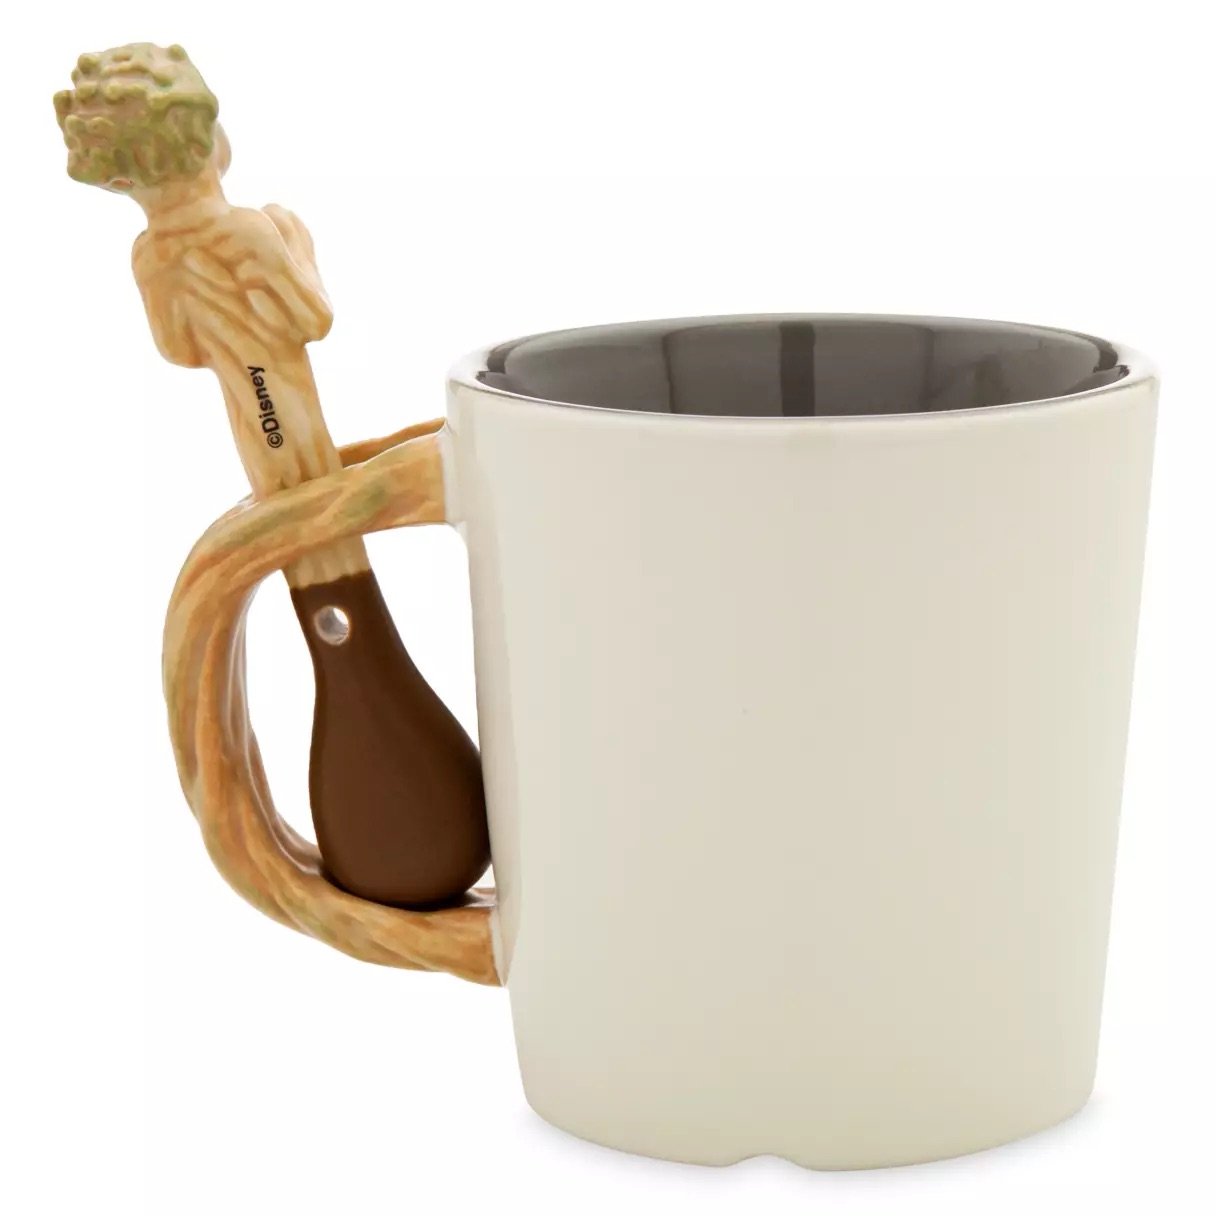 "I Am Groot" Mug with Spoon